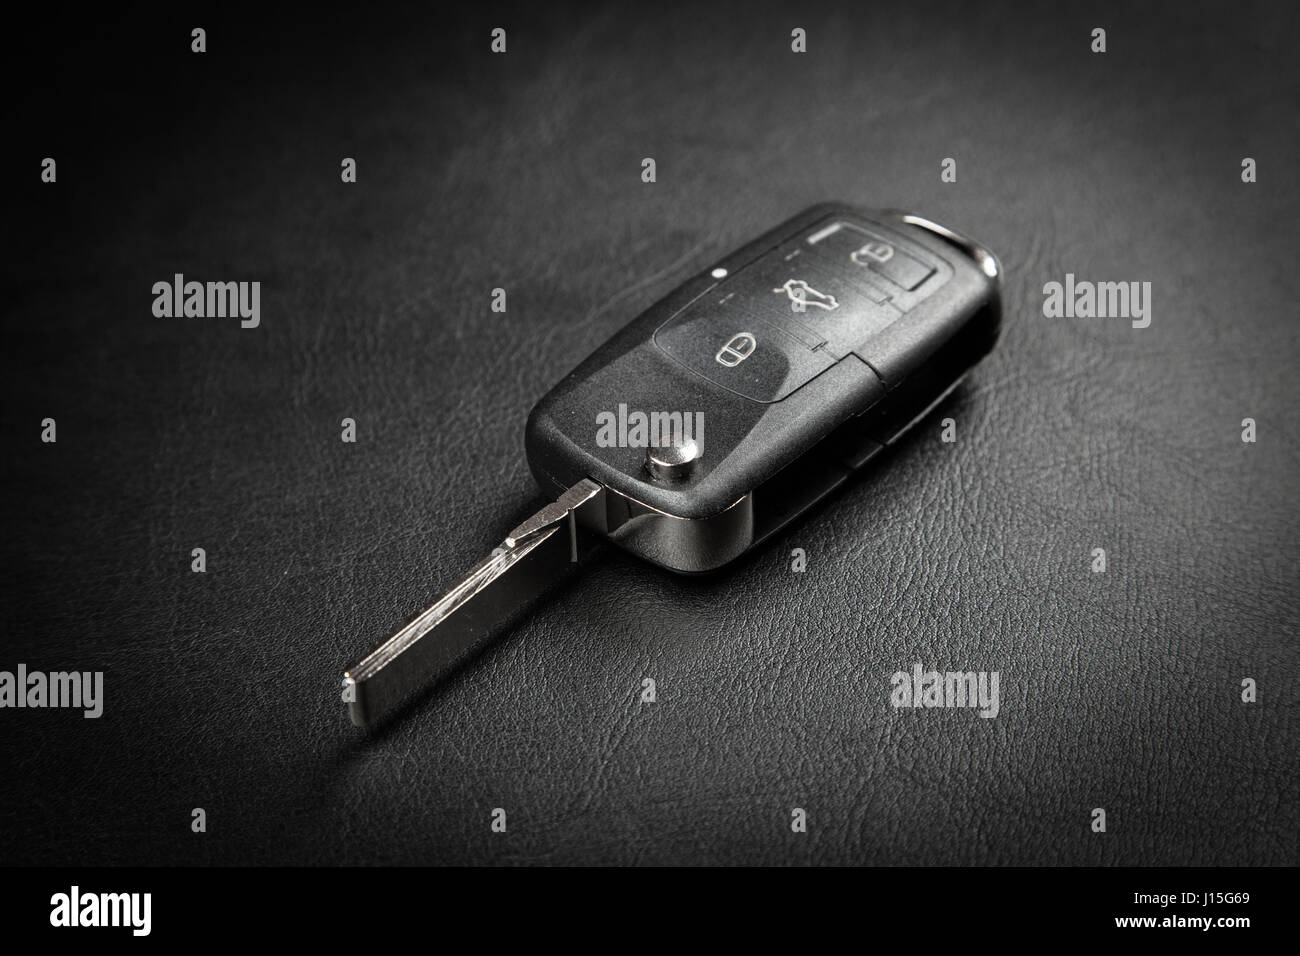 Car key on dark background Stock Photo